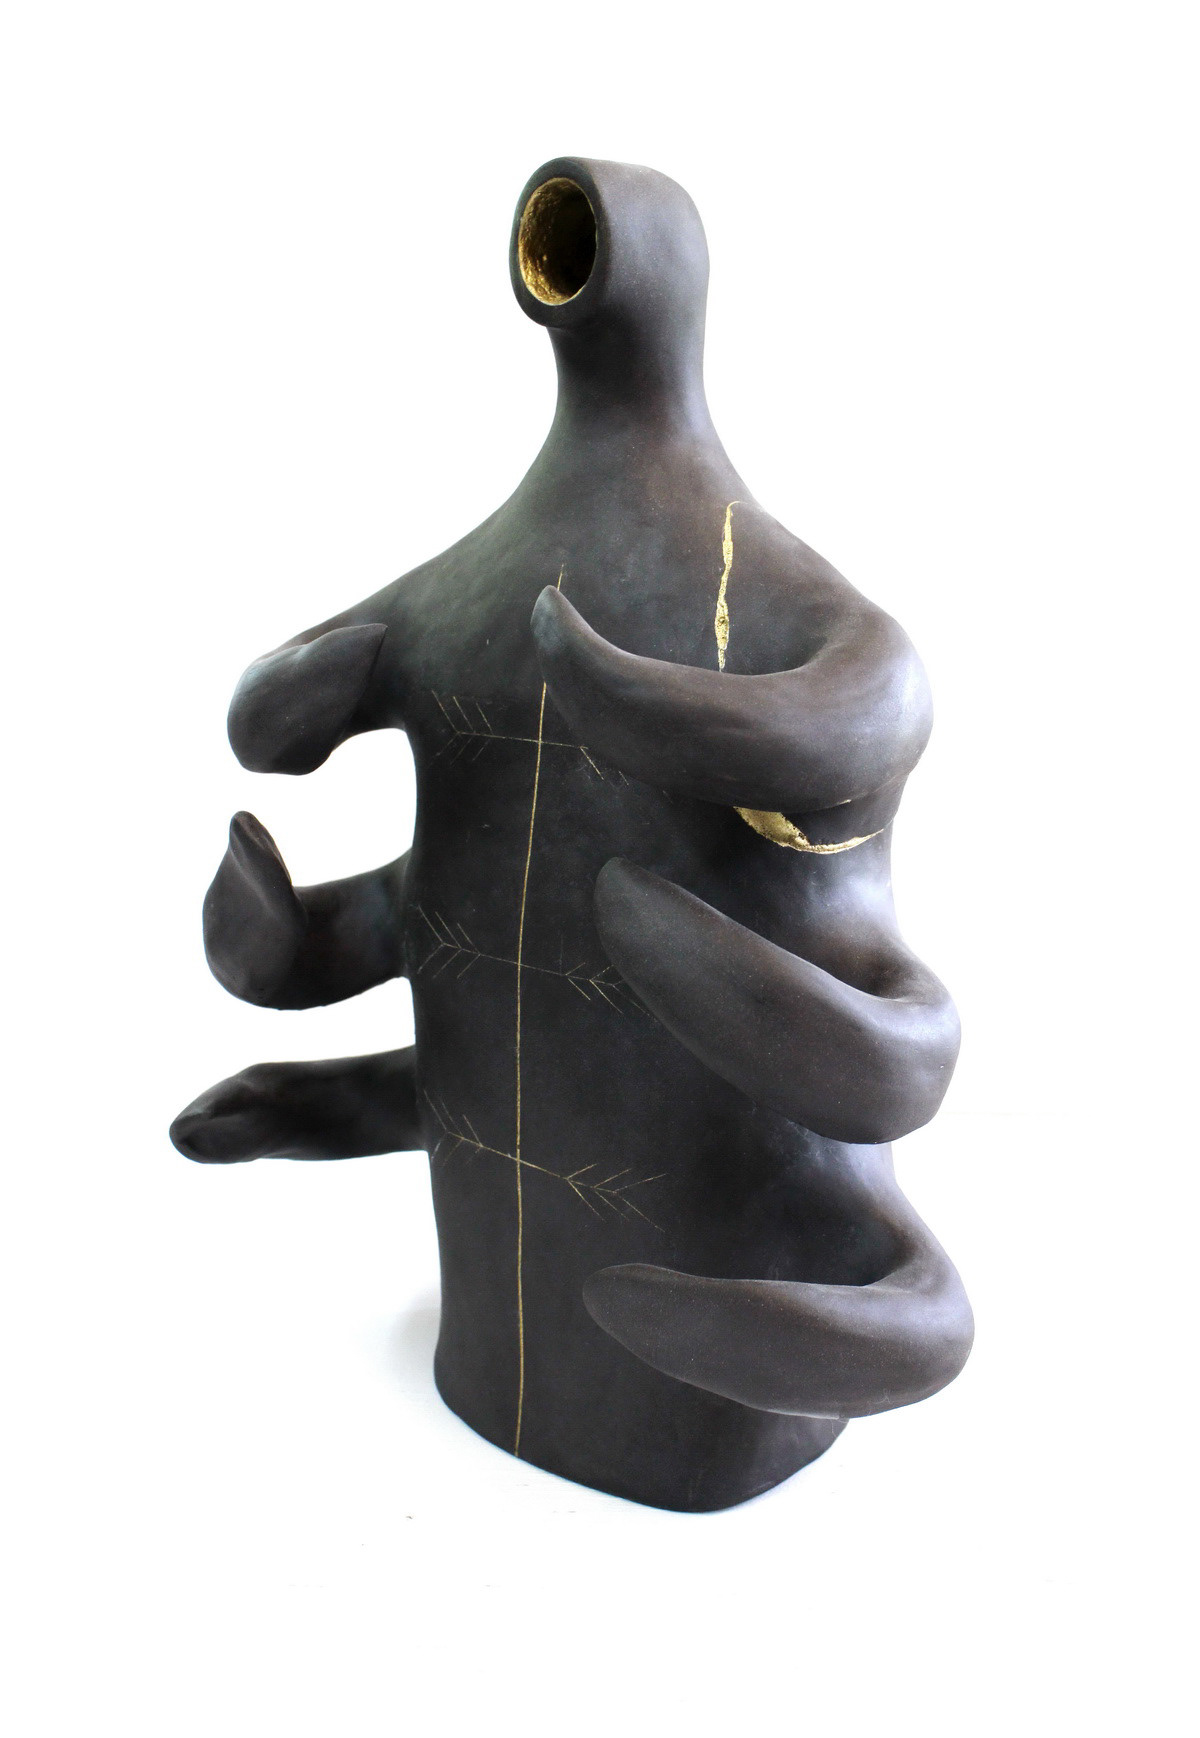 sculpture statue clay BLACK CLAY man figure molding contemporary art